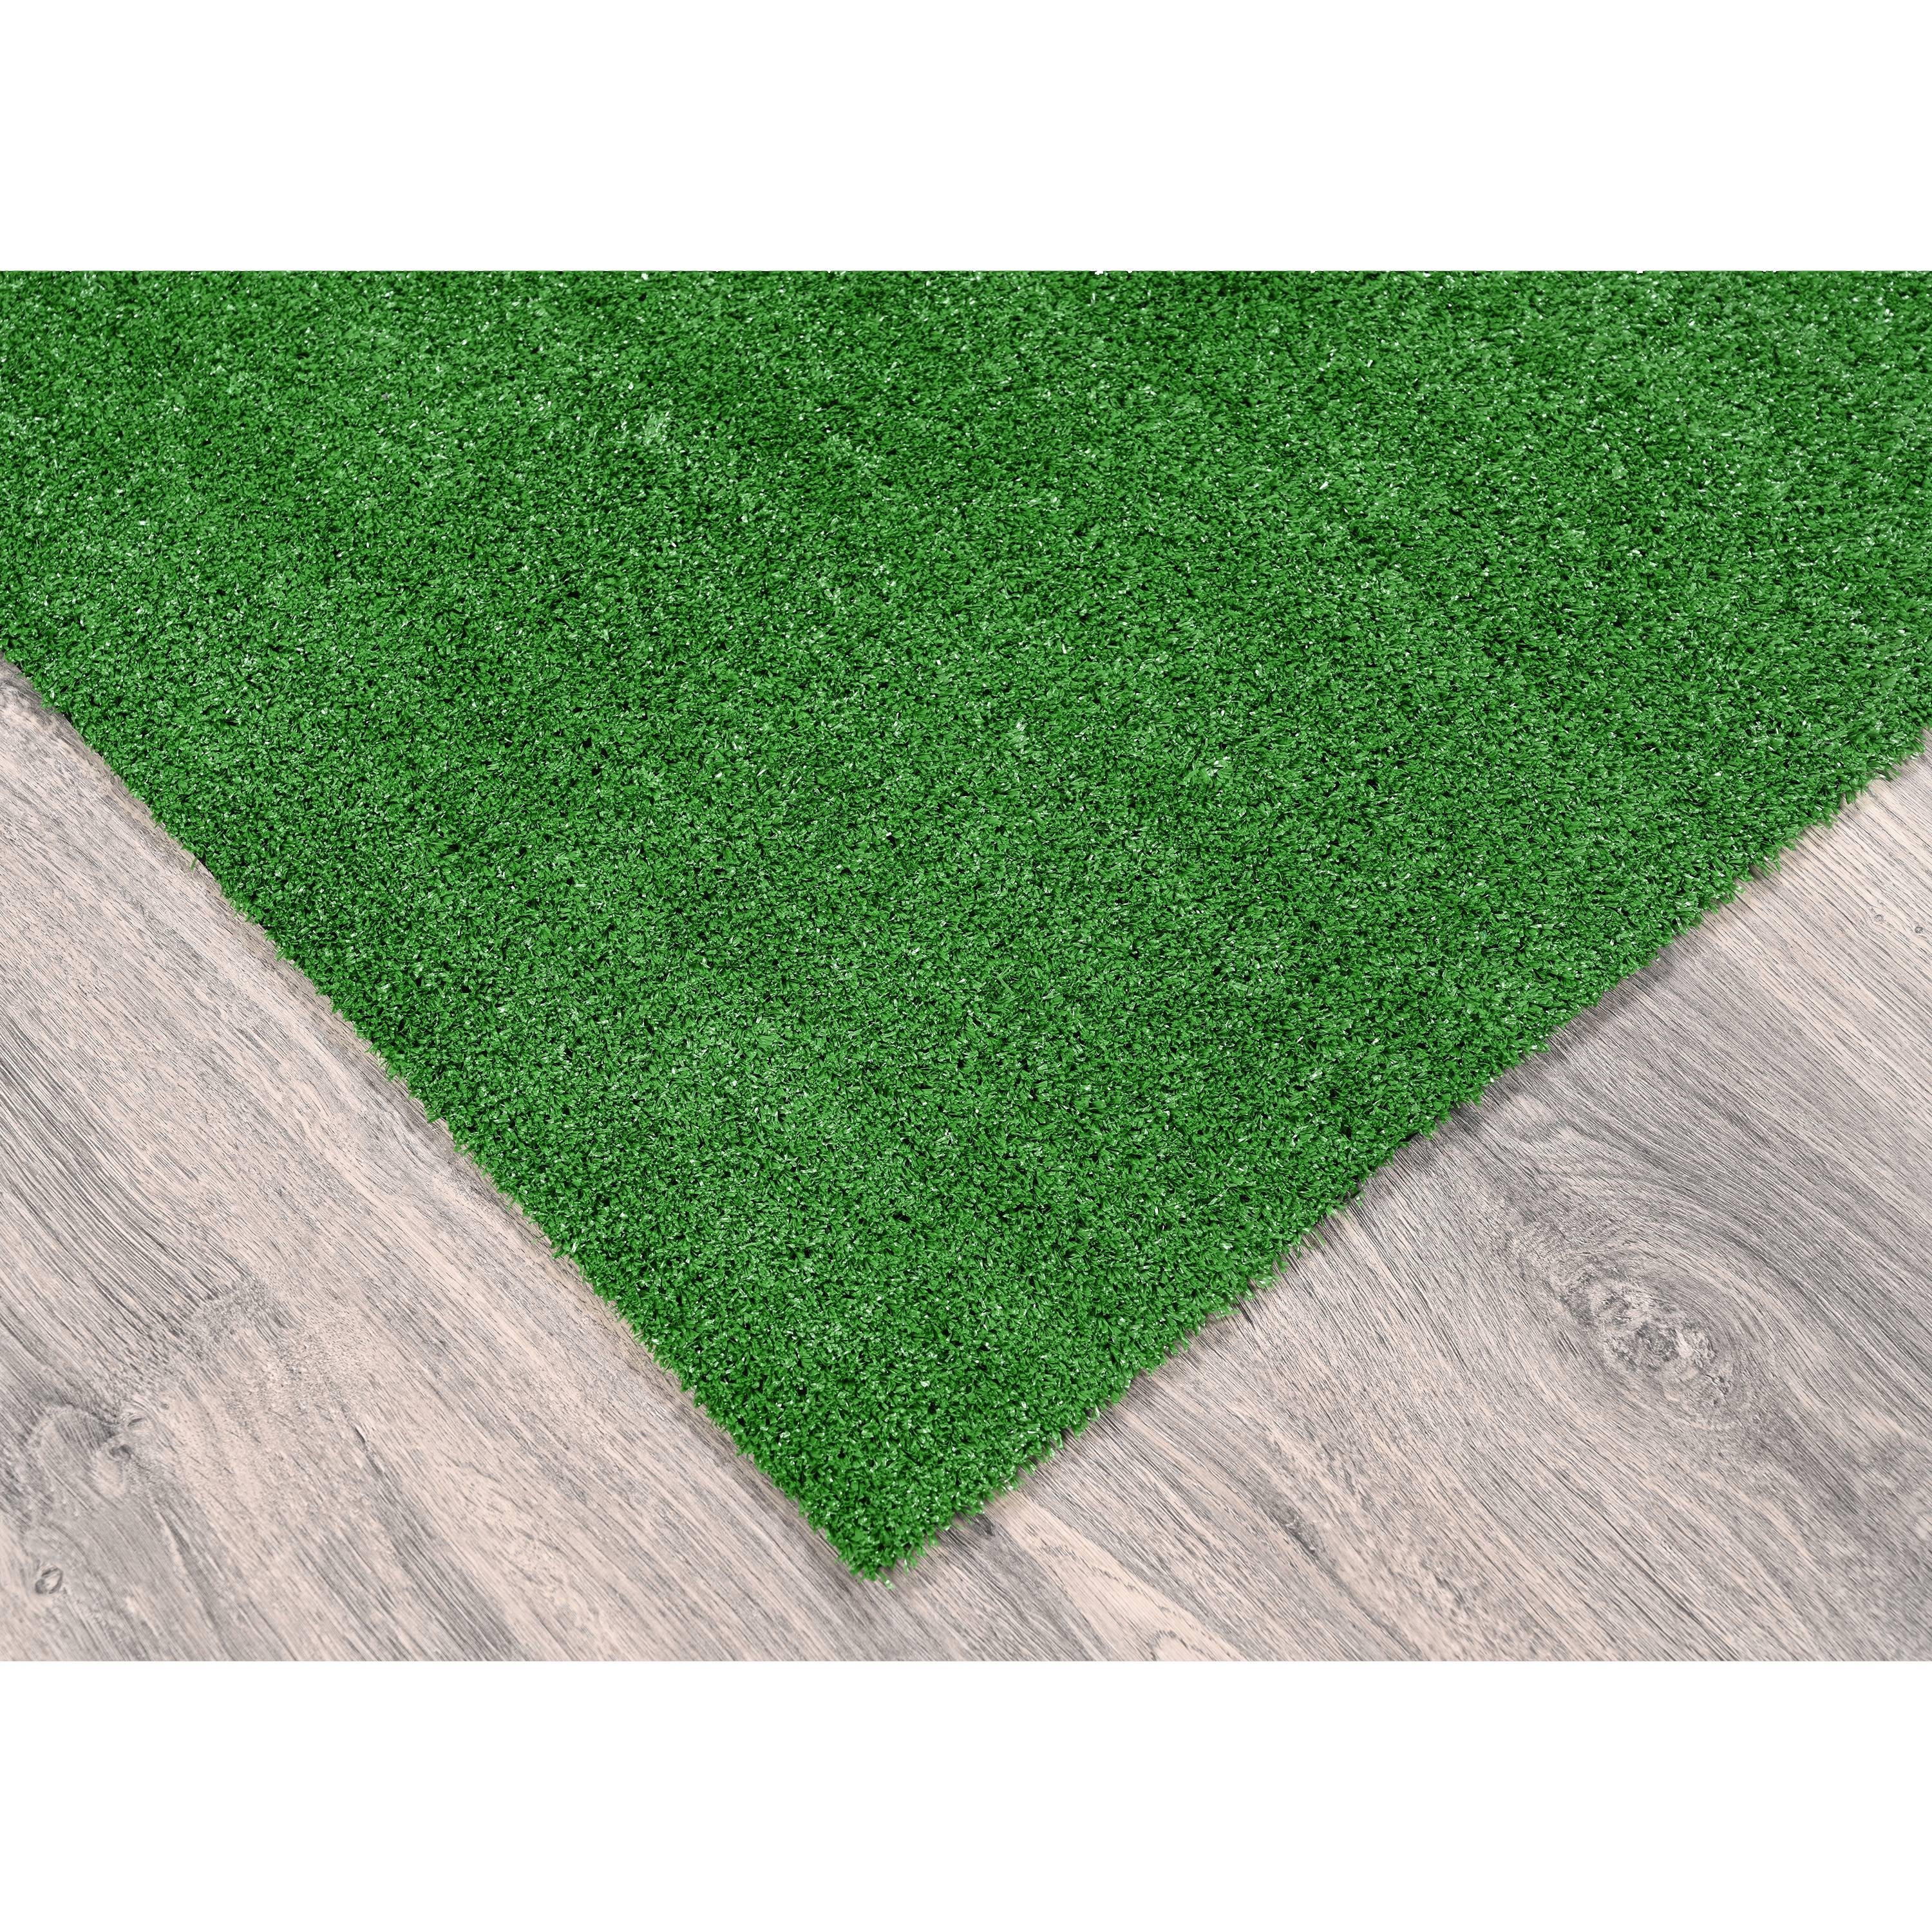 Garland Rug Artificial Grass 4 ft. x 6 ft. Indoor/Outdoor Area Rug Green - image 4 of 6